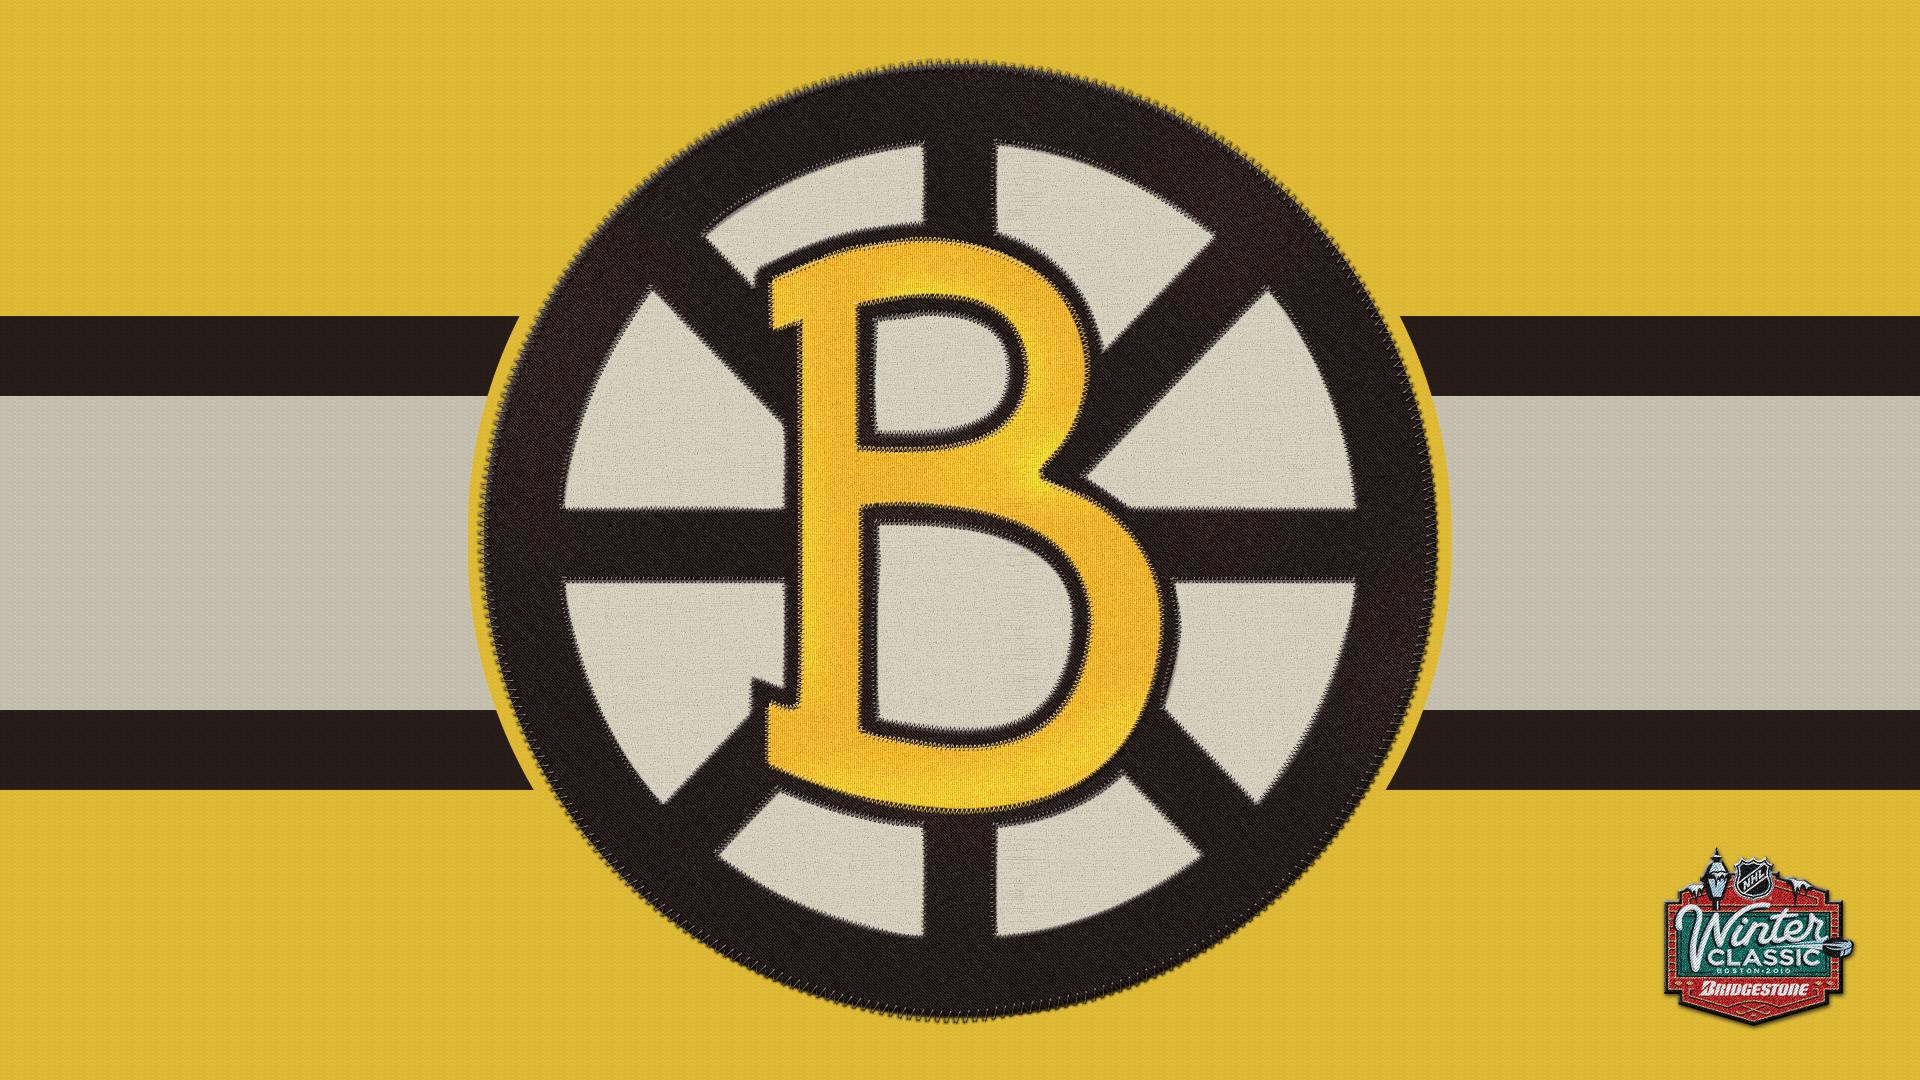 Awesome Boston Bruins wallpaper. Boston Bruins wallpaper